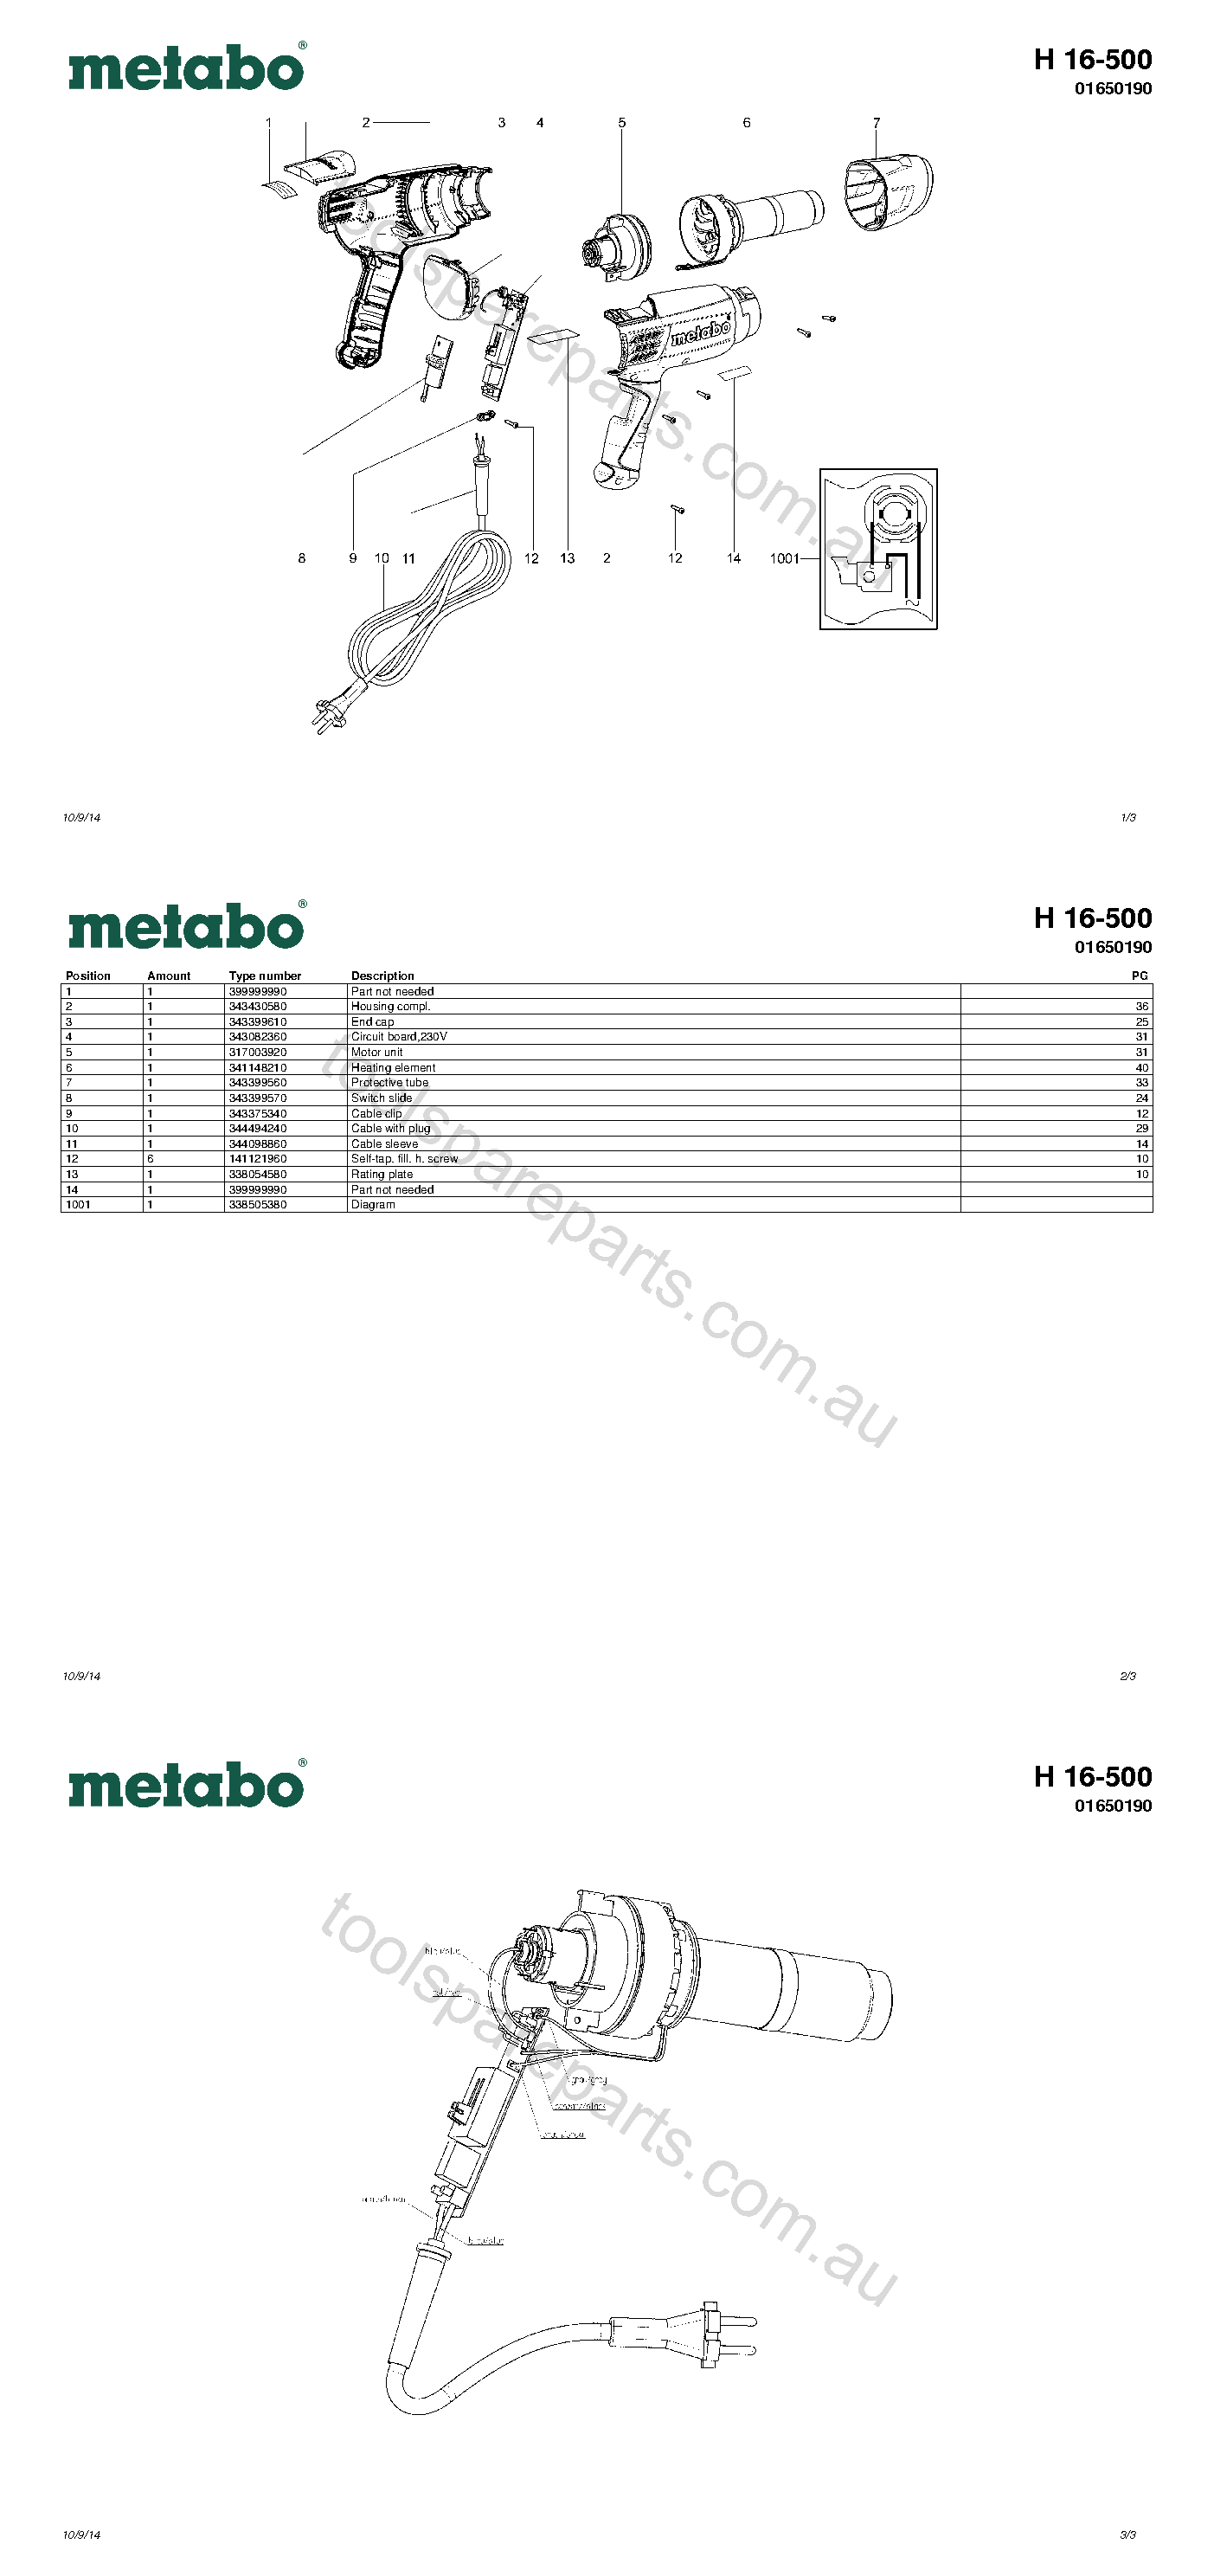 Metabo H 16-500 01650190  Diagram 1